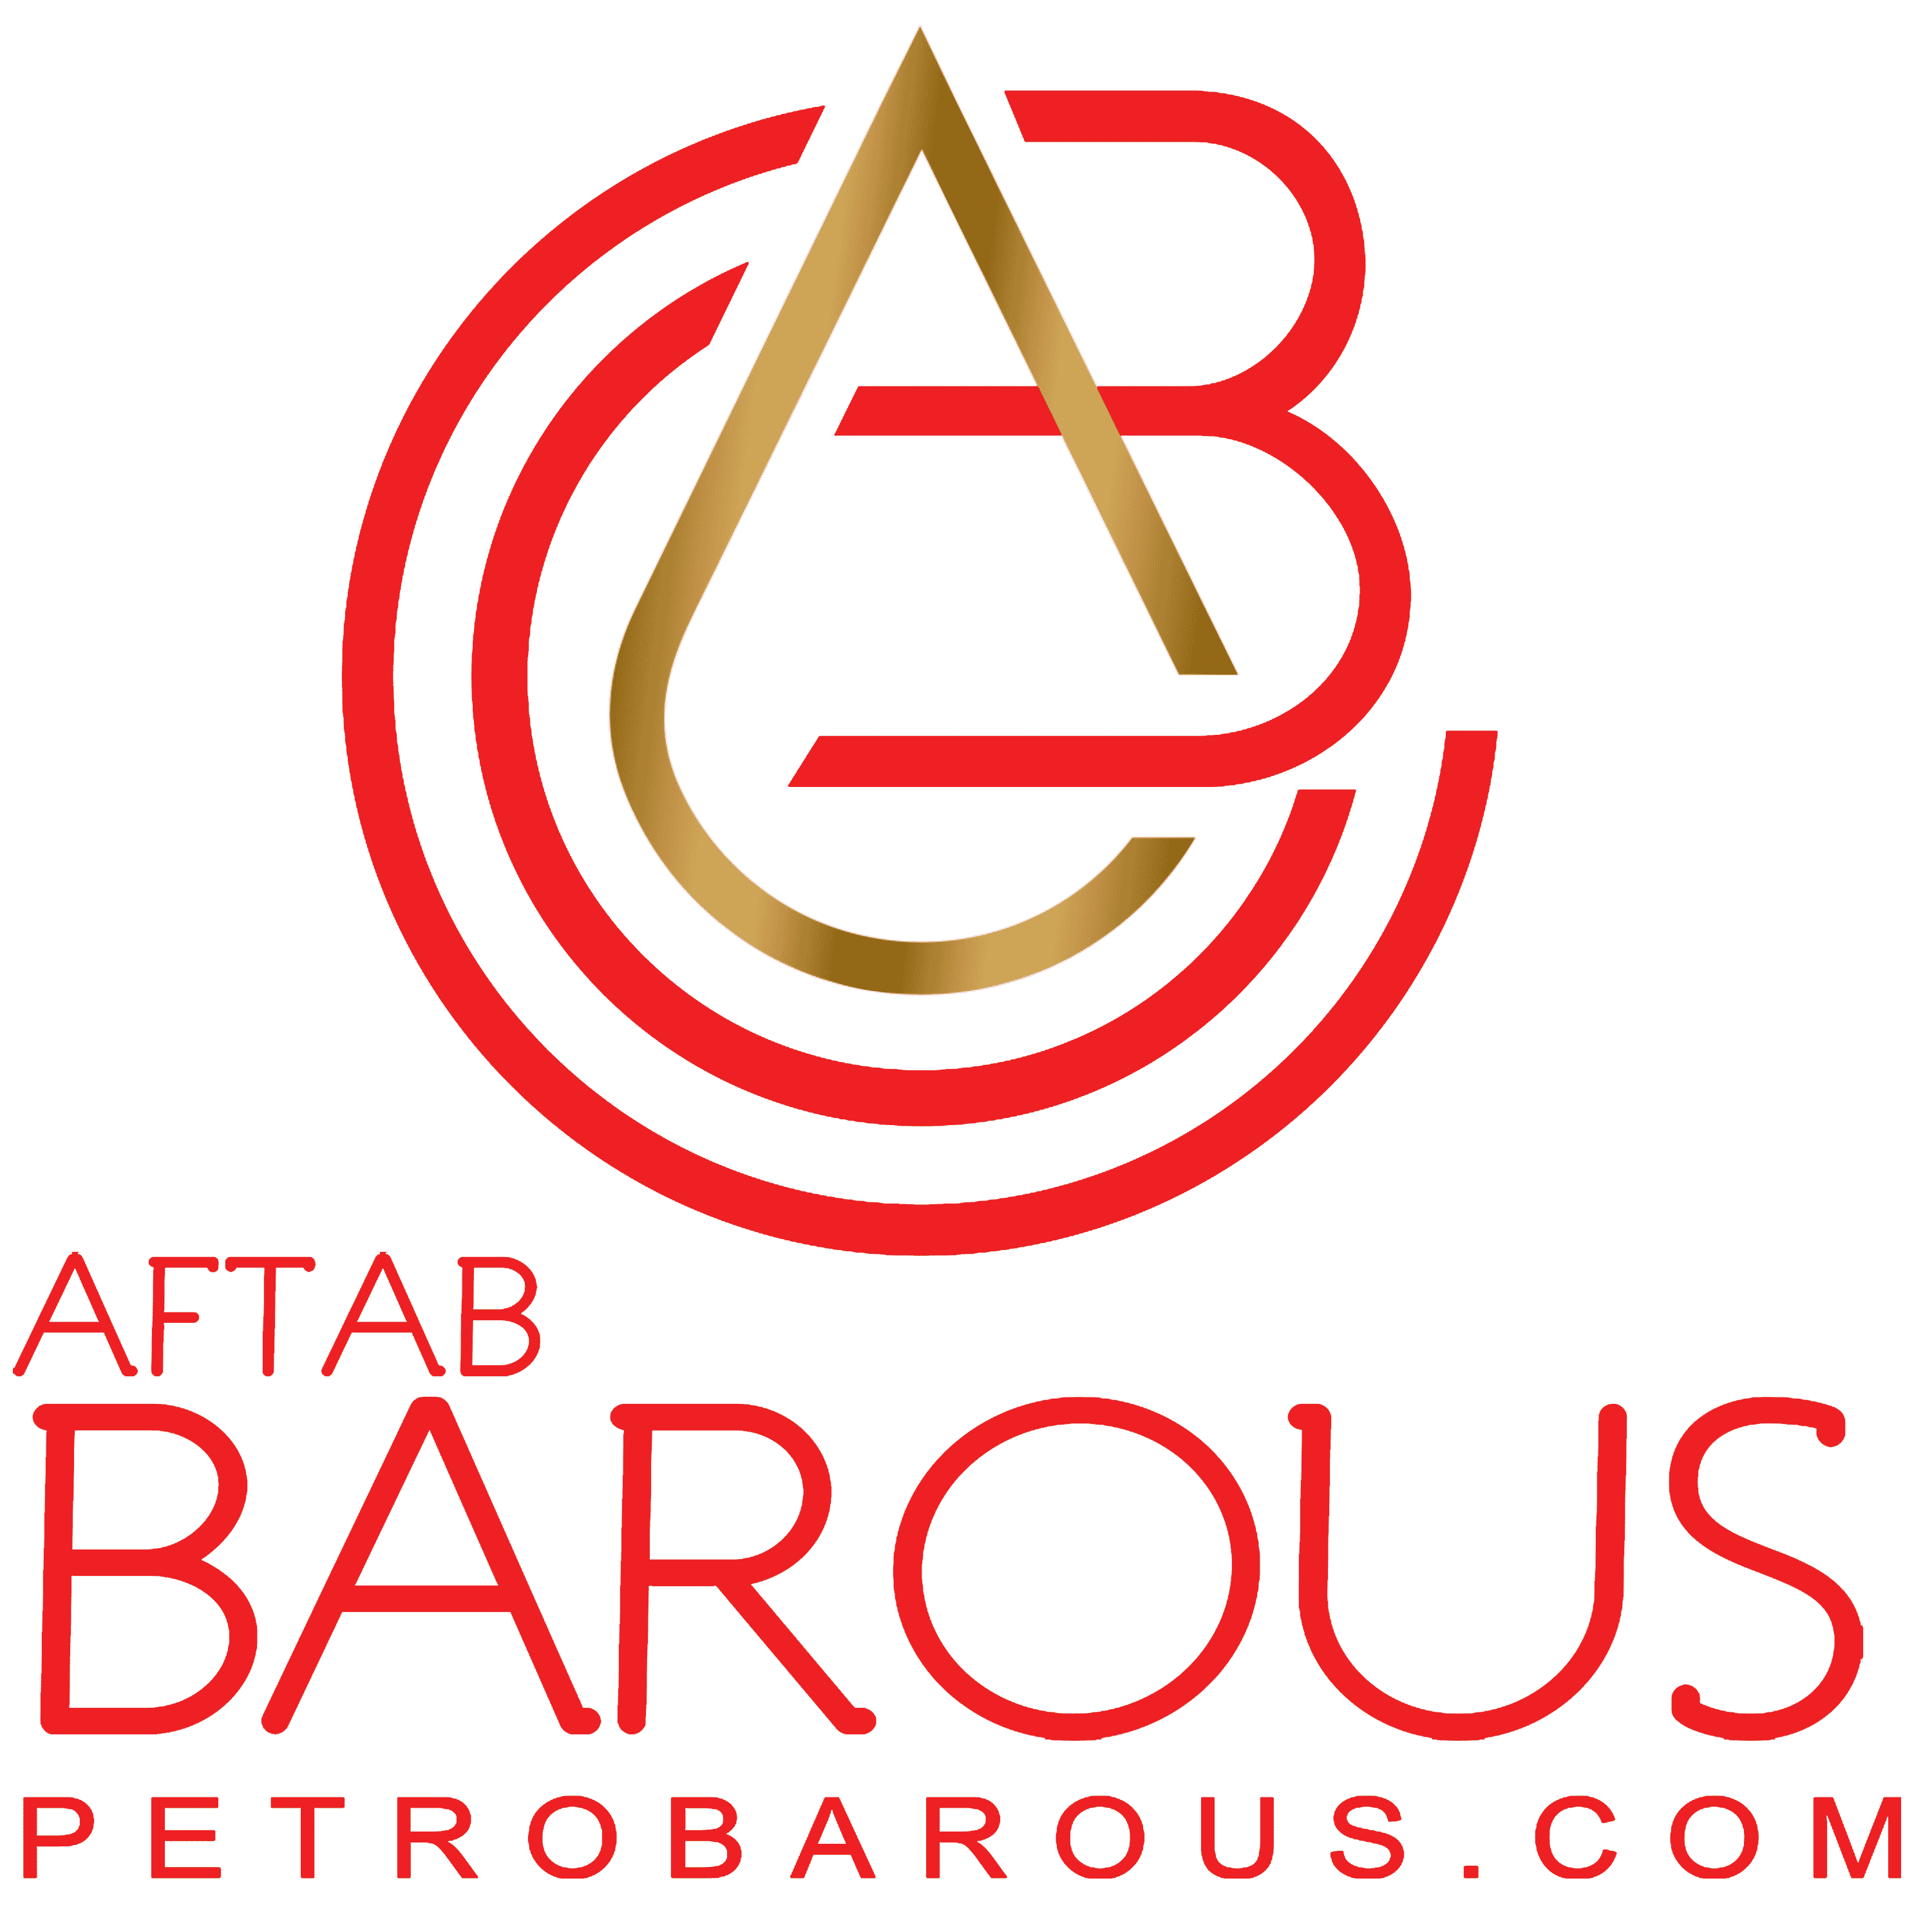 Petro Barous Co